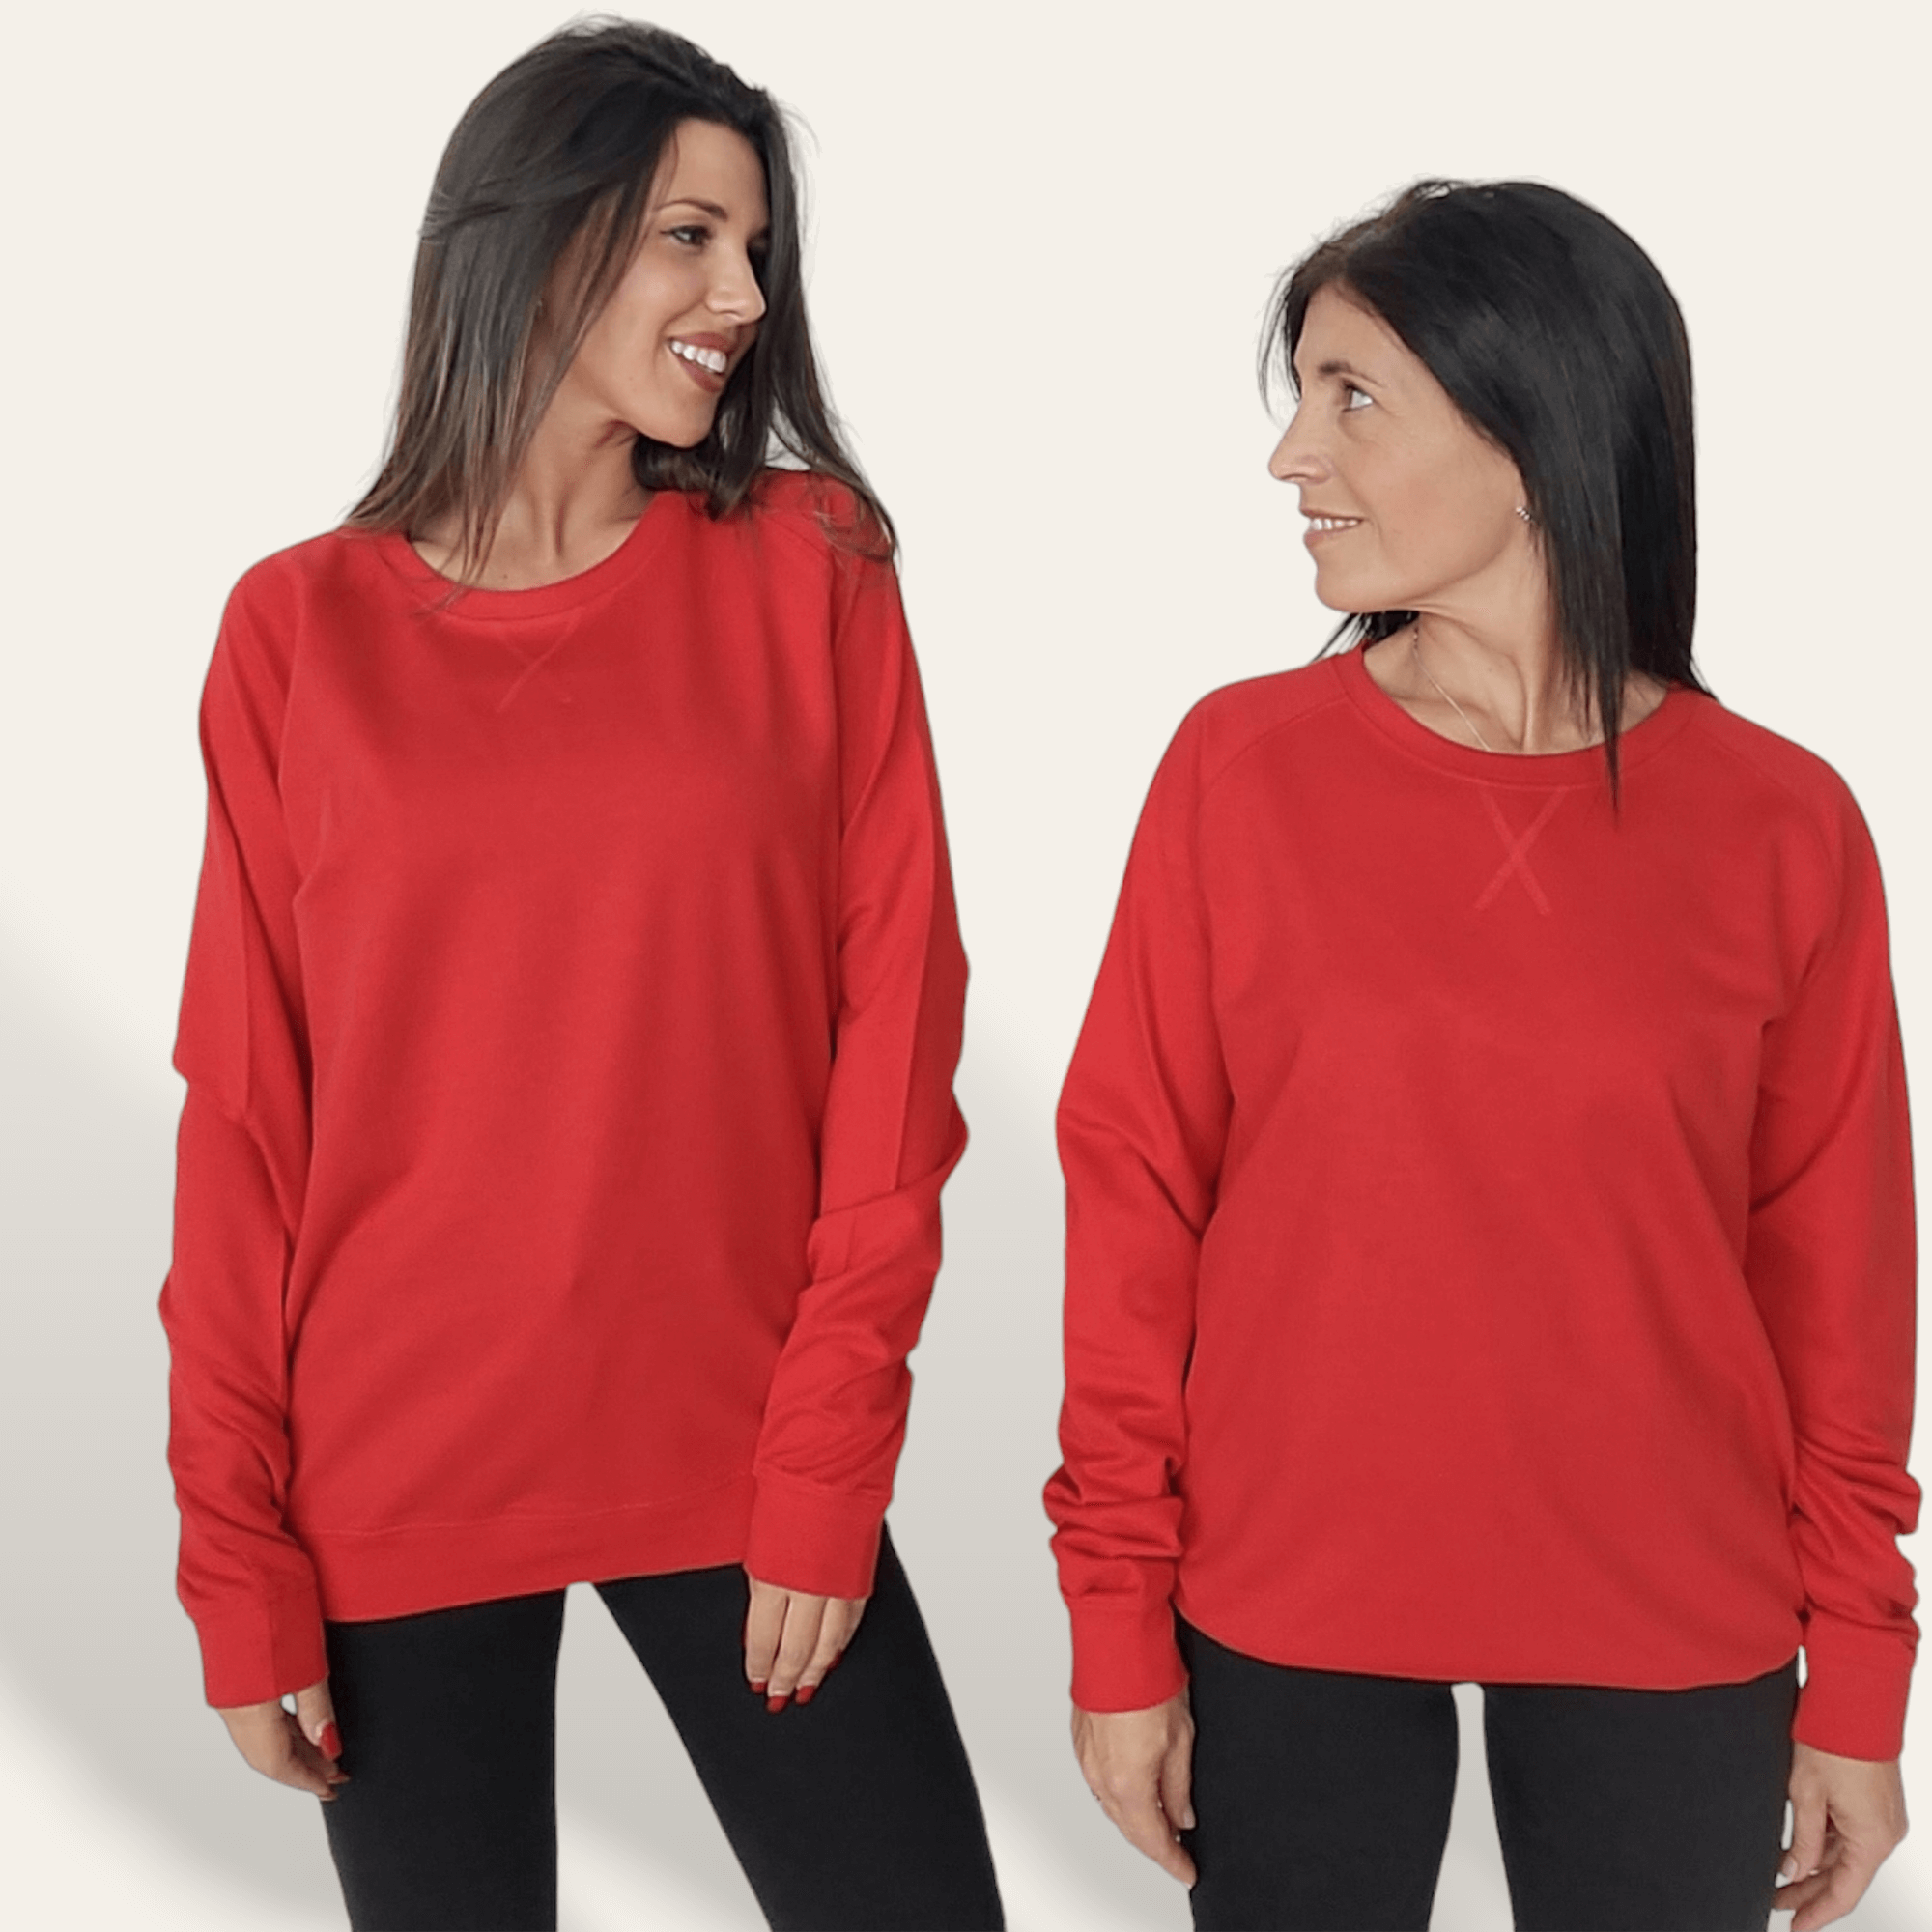 Red basic sweatshirt